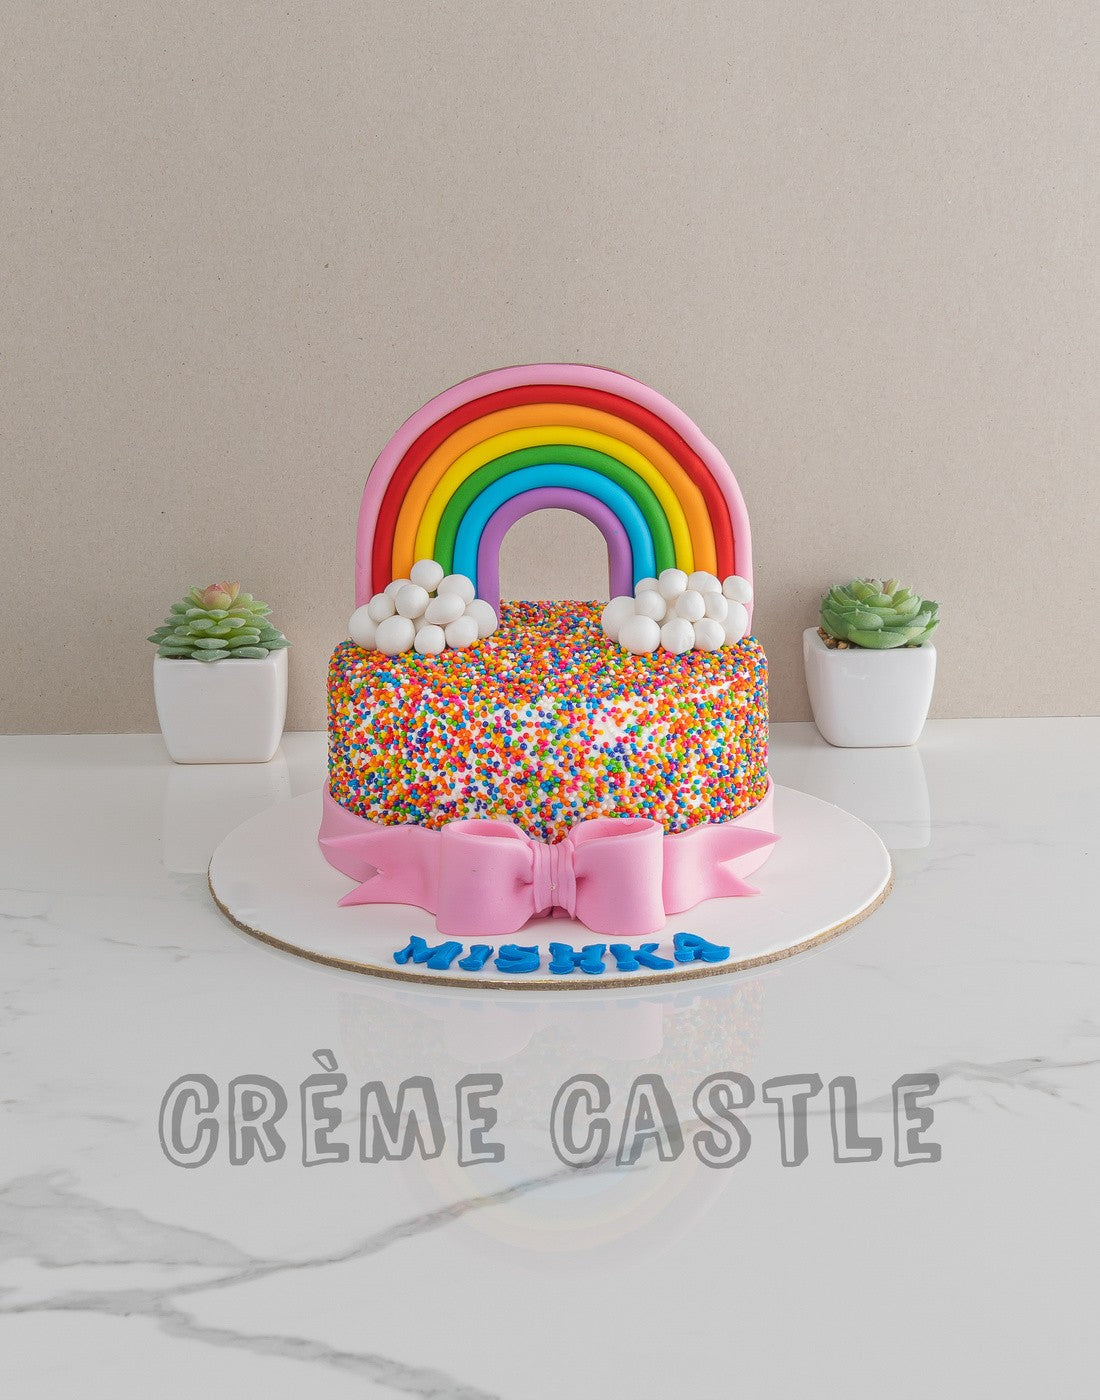 Melted Rainbow Cake Recipe - Tablespoon.com